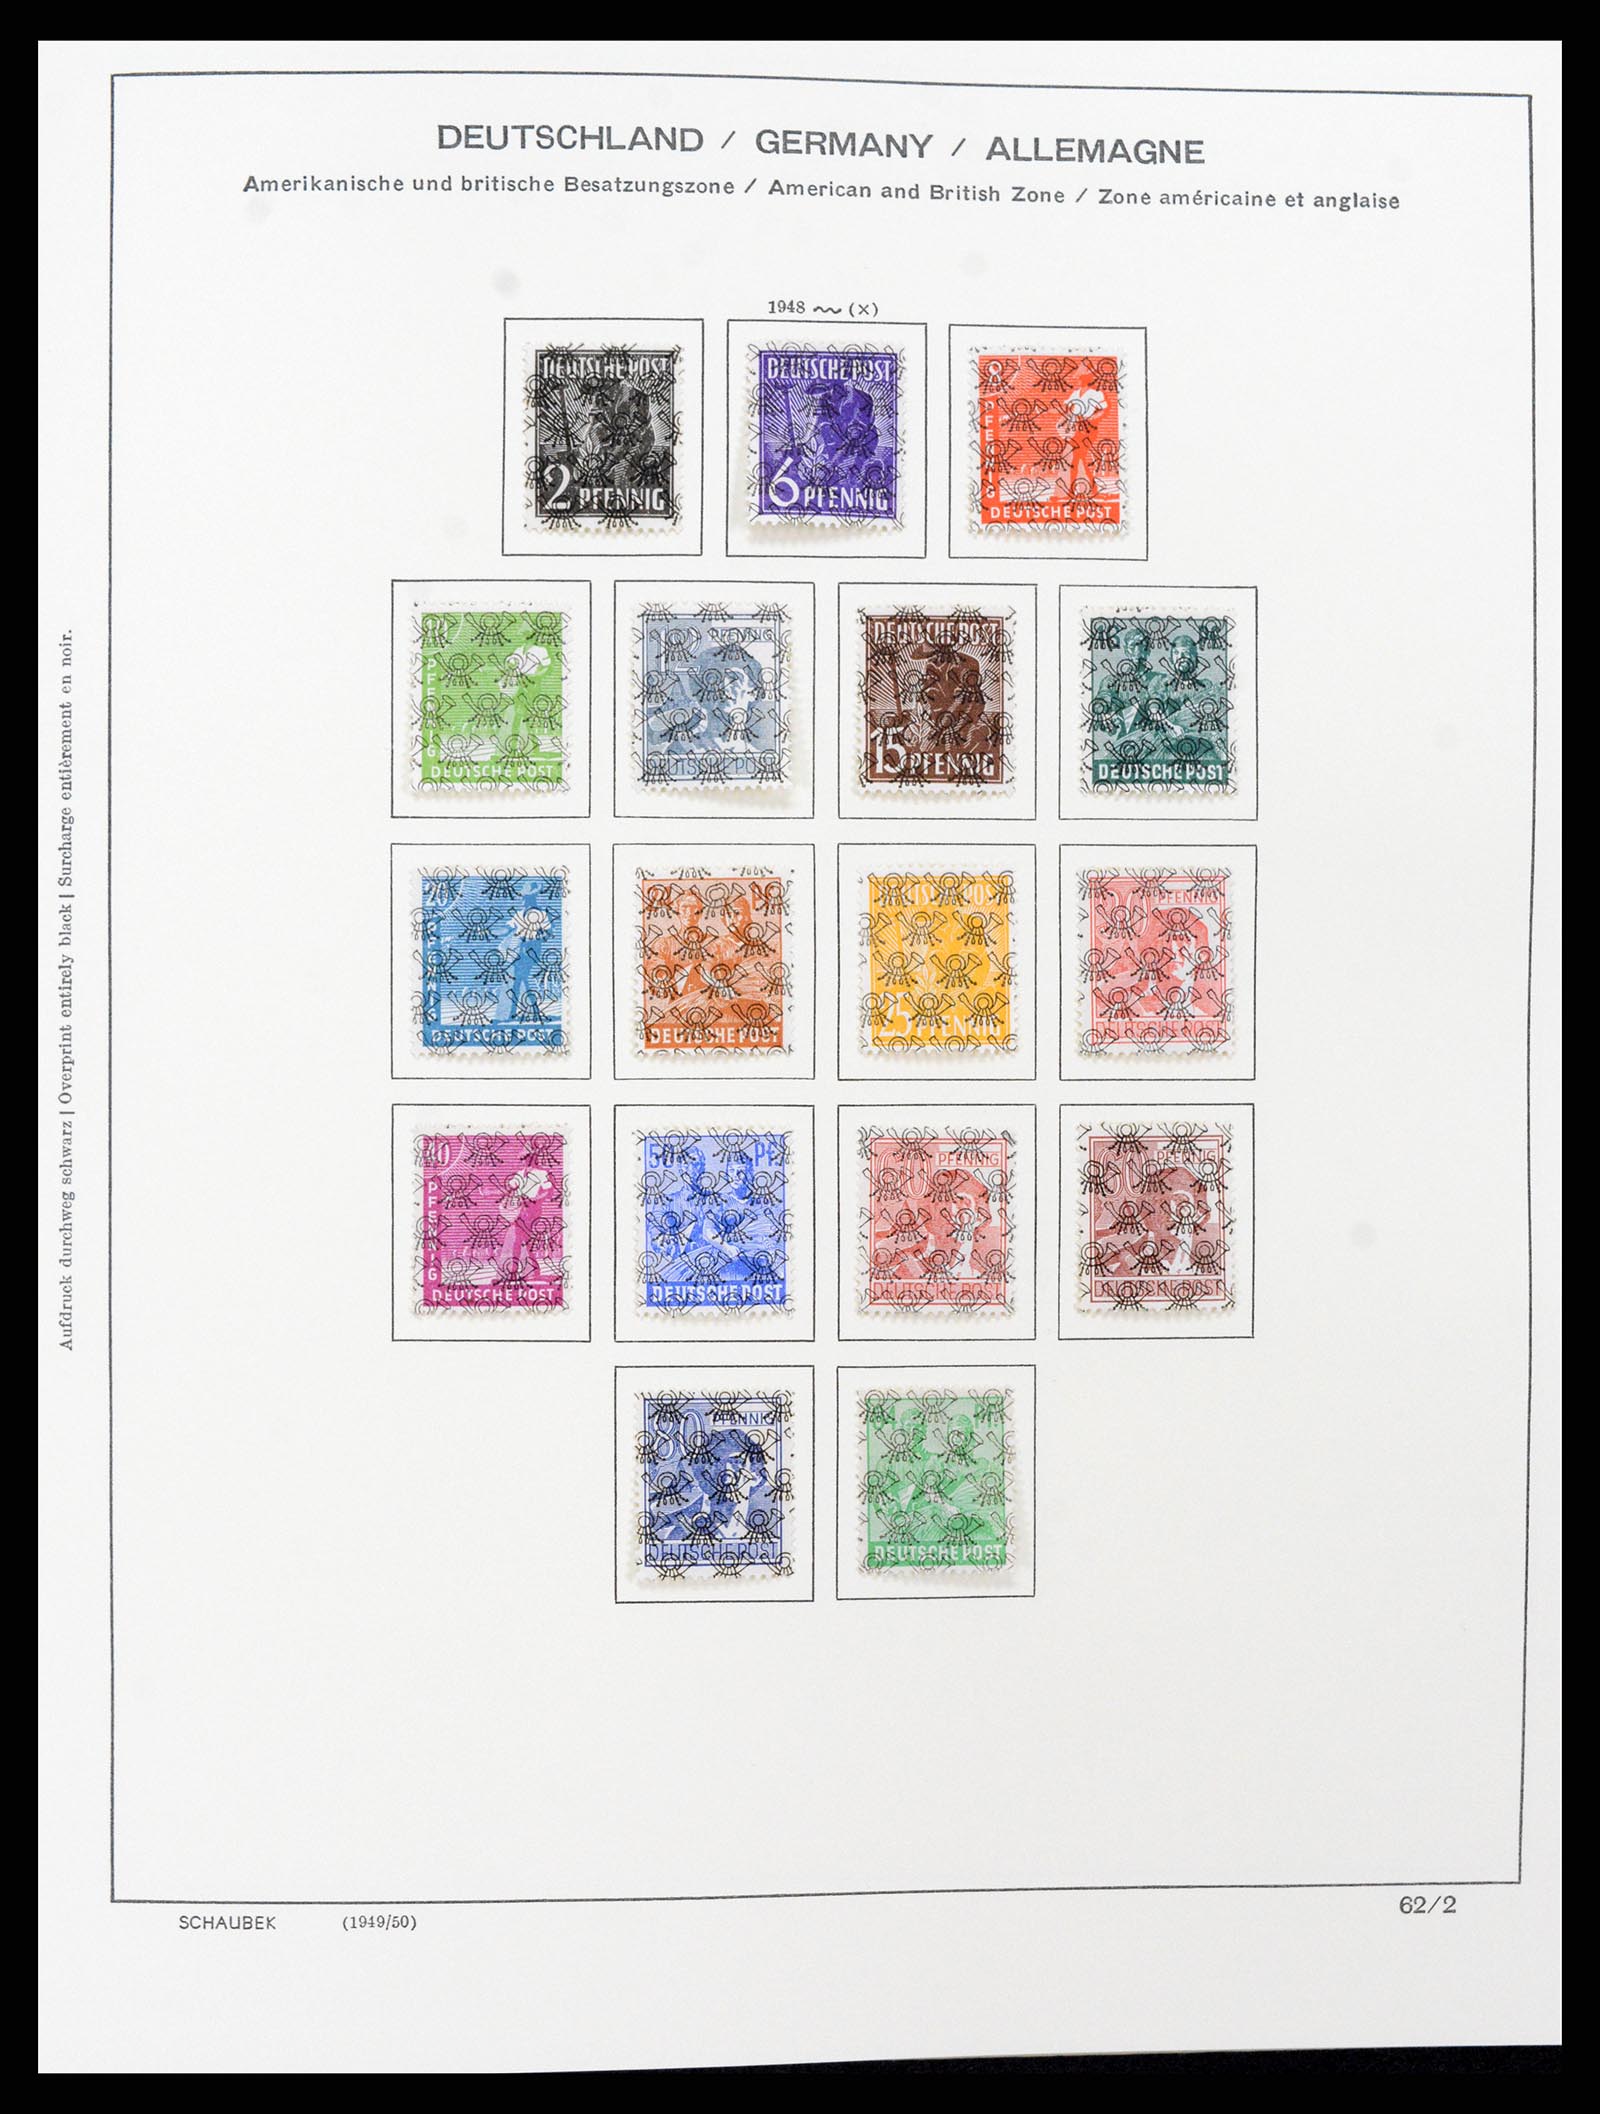 37645 009 - Stamp collection 37645 German Zones 1945-1949.